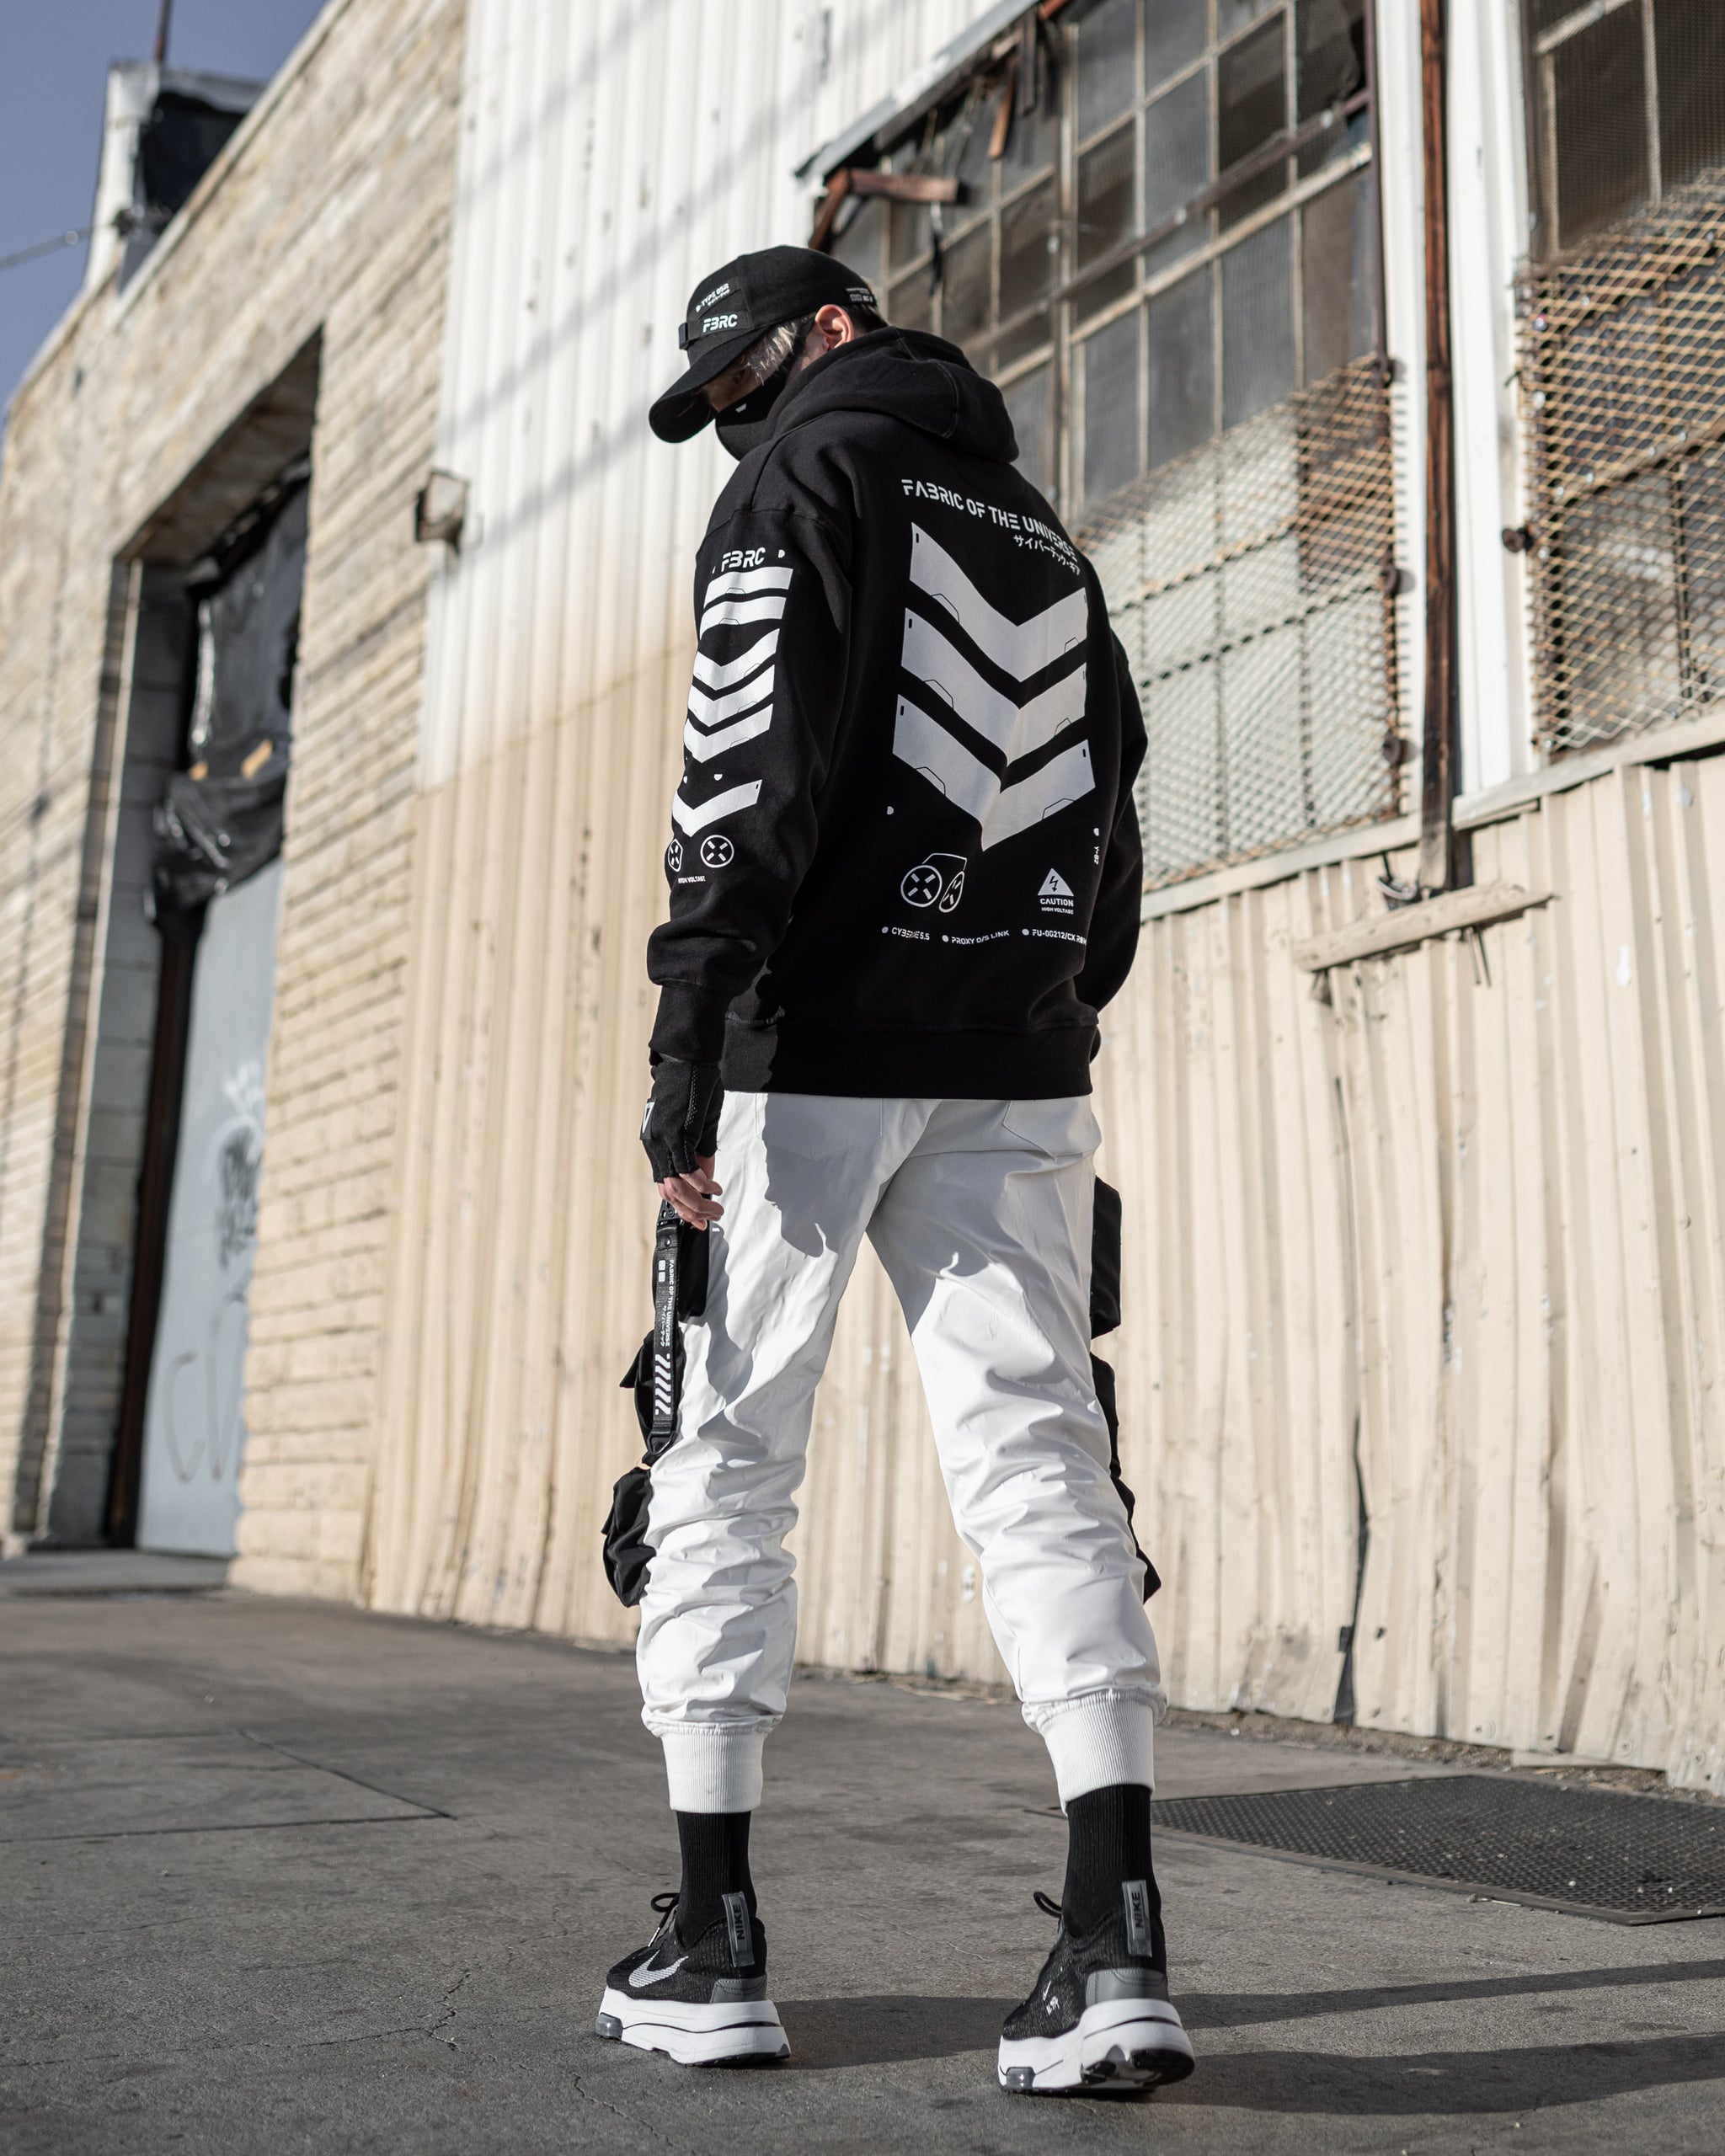 Fabric of the Universe - Fabric of the Universe / Upcoming hoodies  Kitsune-5X and XB-03 preview . Which one looks more appealing? . . . .  #fabricoftheuniverse #techwear #streetwear #hypebeast #highsnobiety  #warcore #cyberpunk #techwearfashion